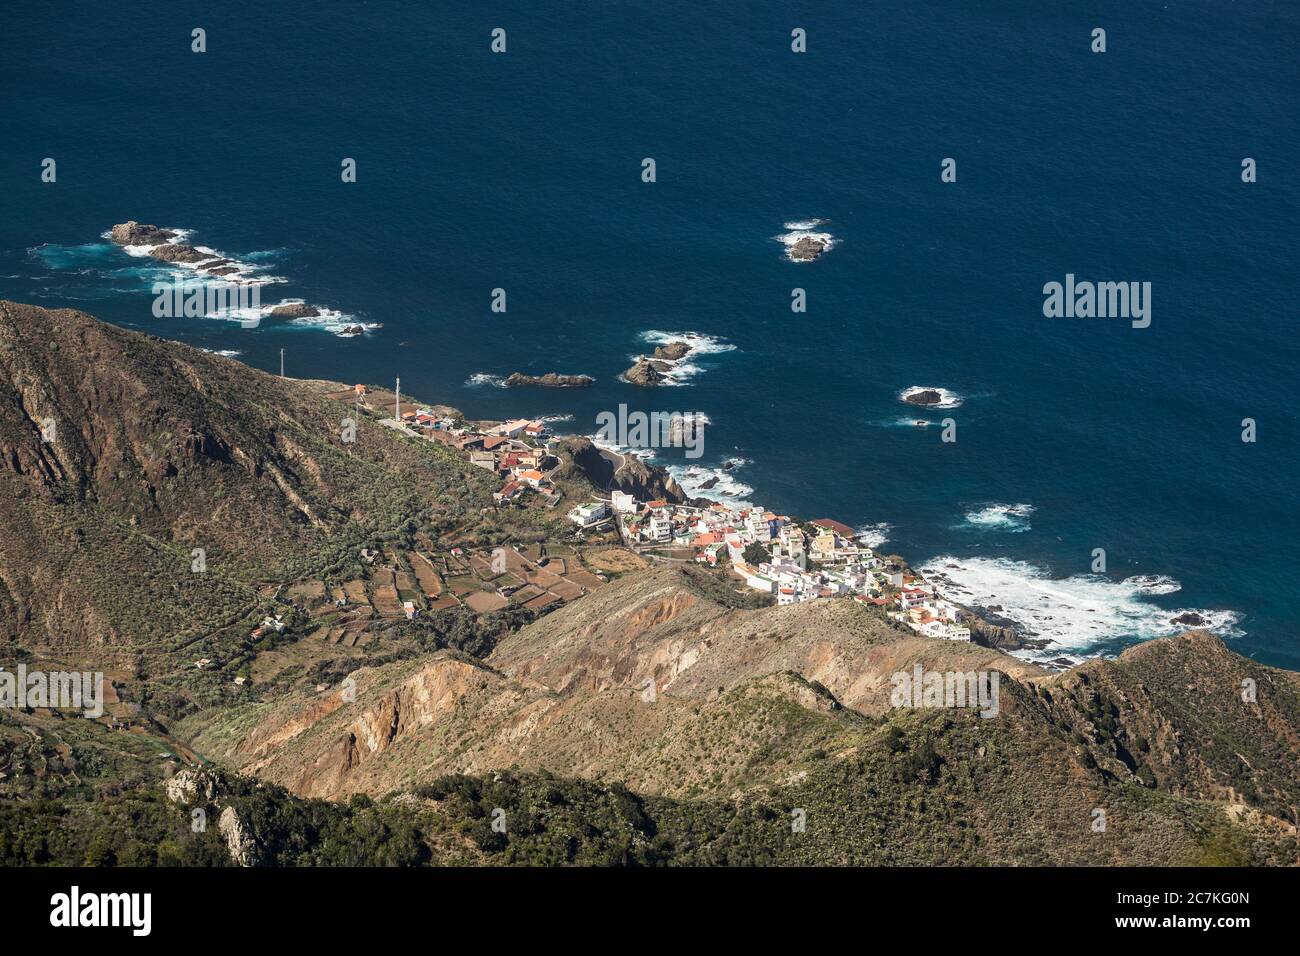 Anaga Mountains with a view of Almaciga on the Atlantic coast, Tenerife, Canary Islands, Spain Stock Photo